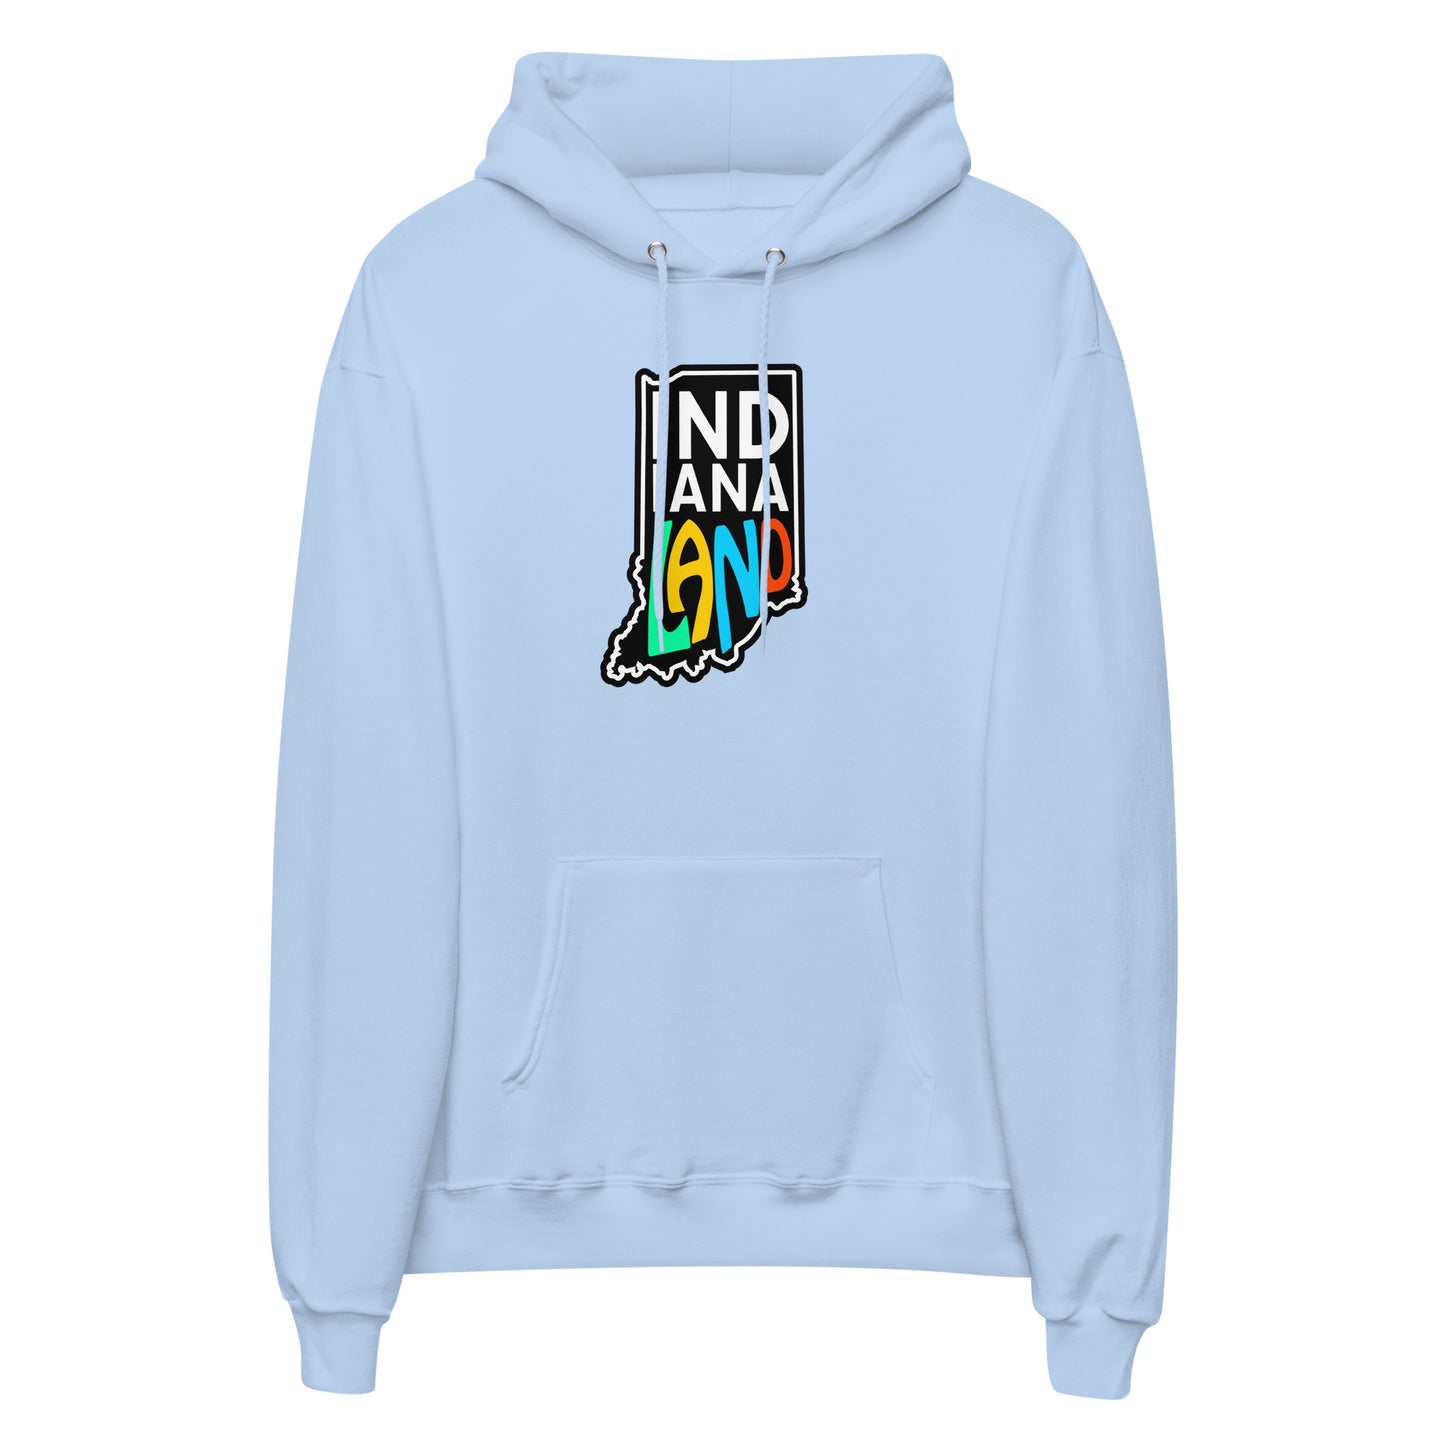 indianaland hoodie